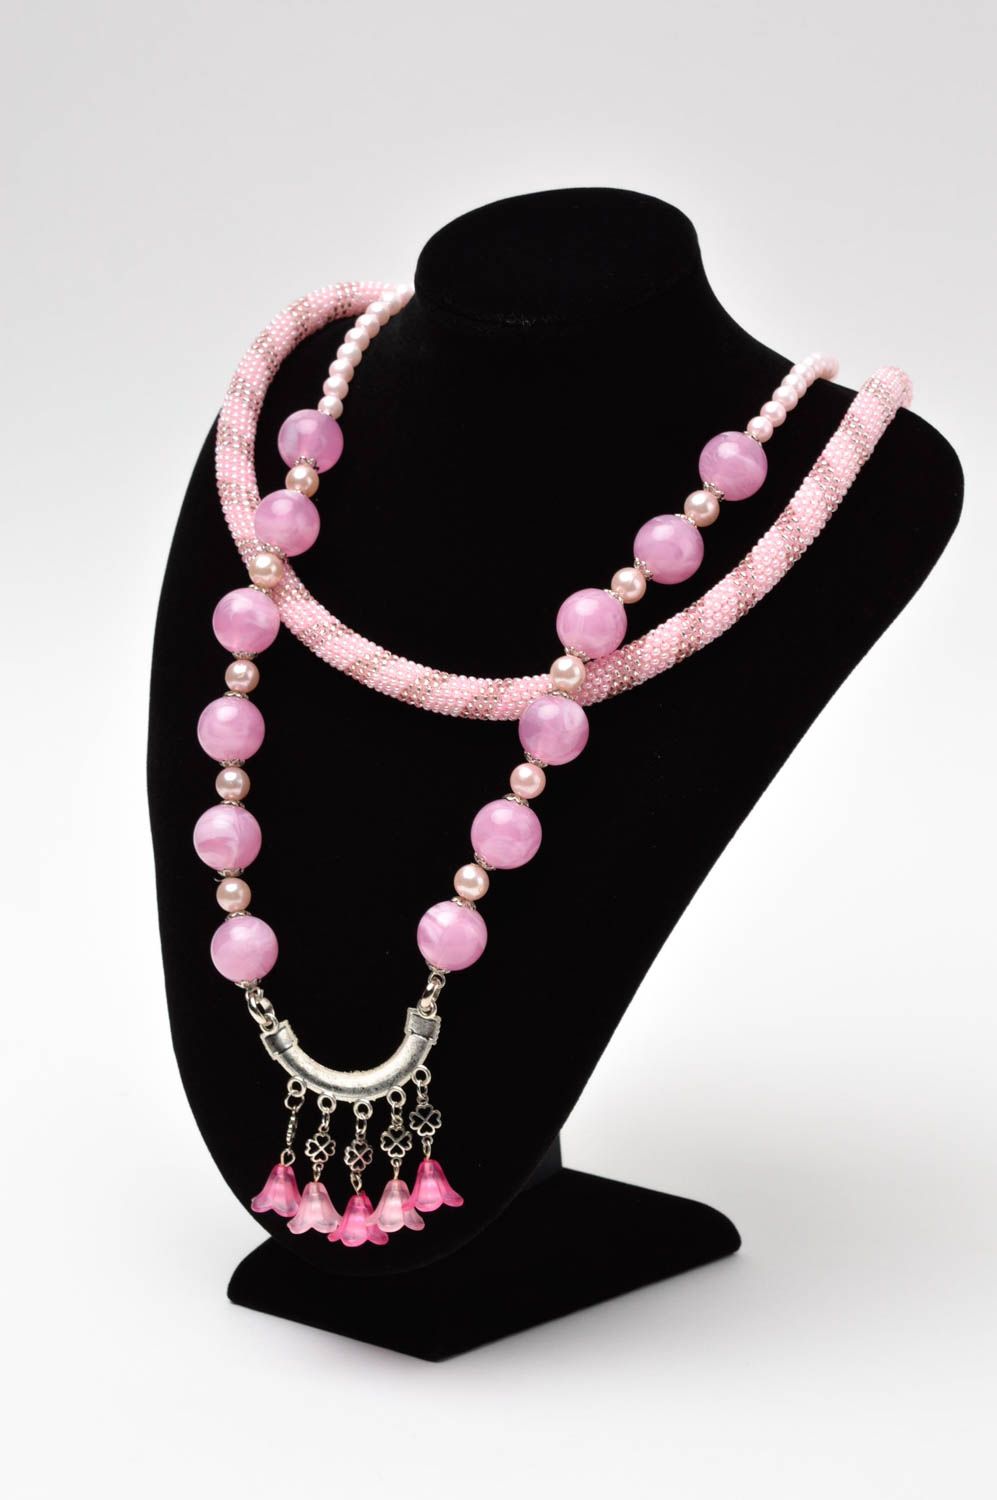 Handmade beaded necklace tender pink necklace elegant designer accessory photo 1